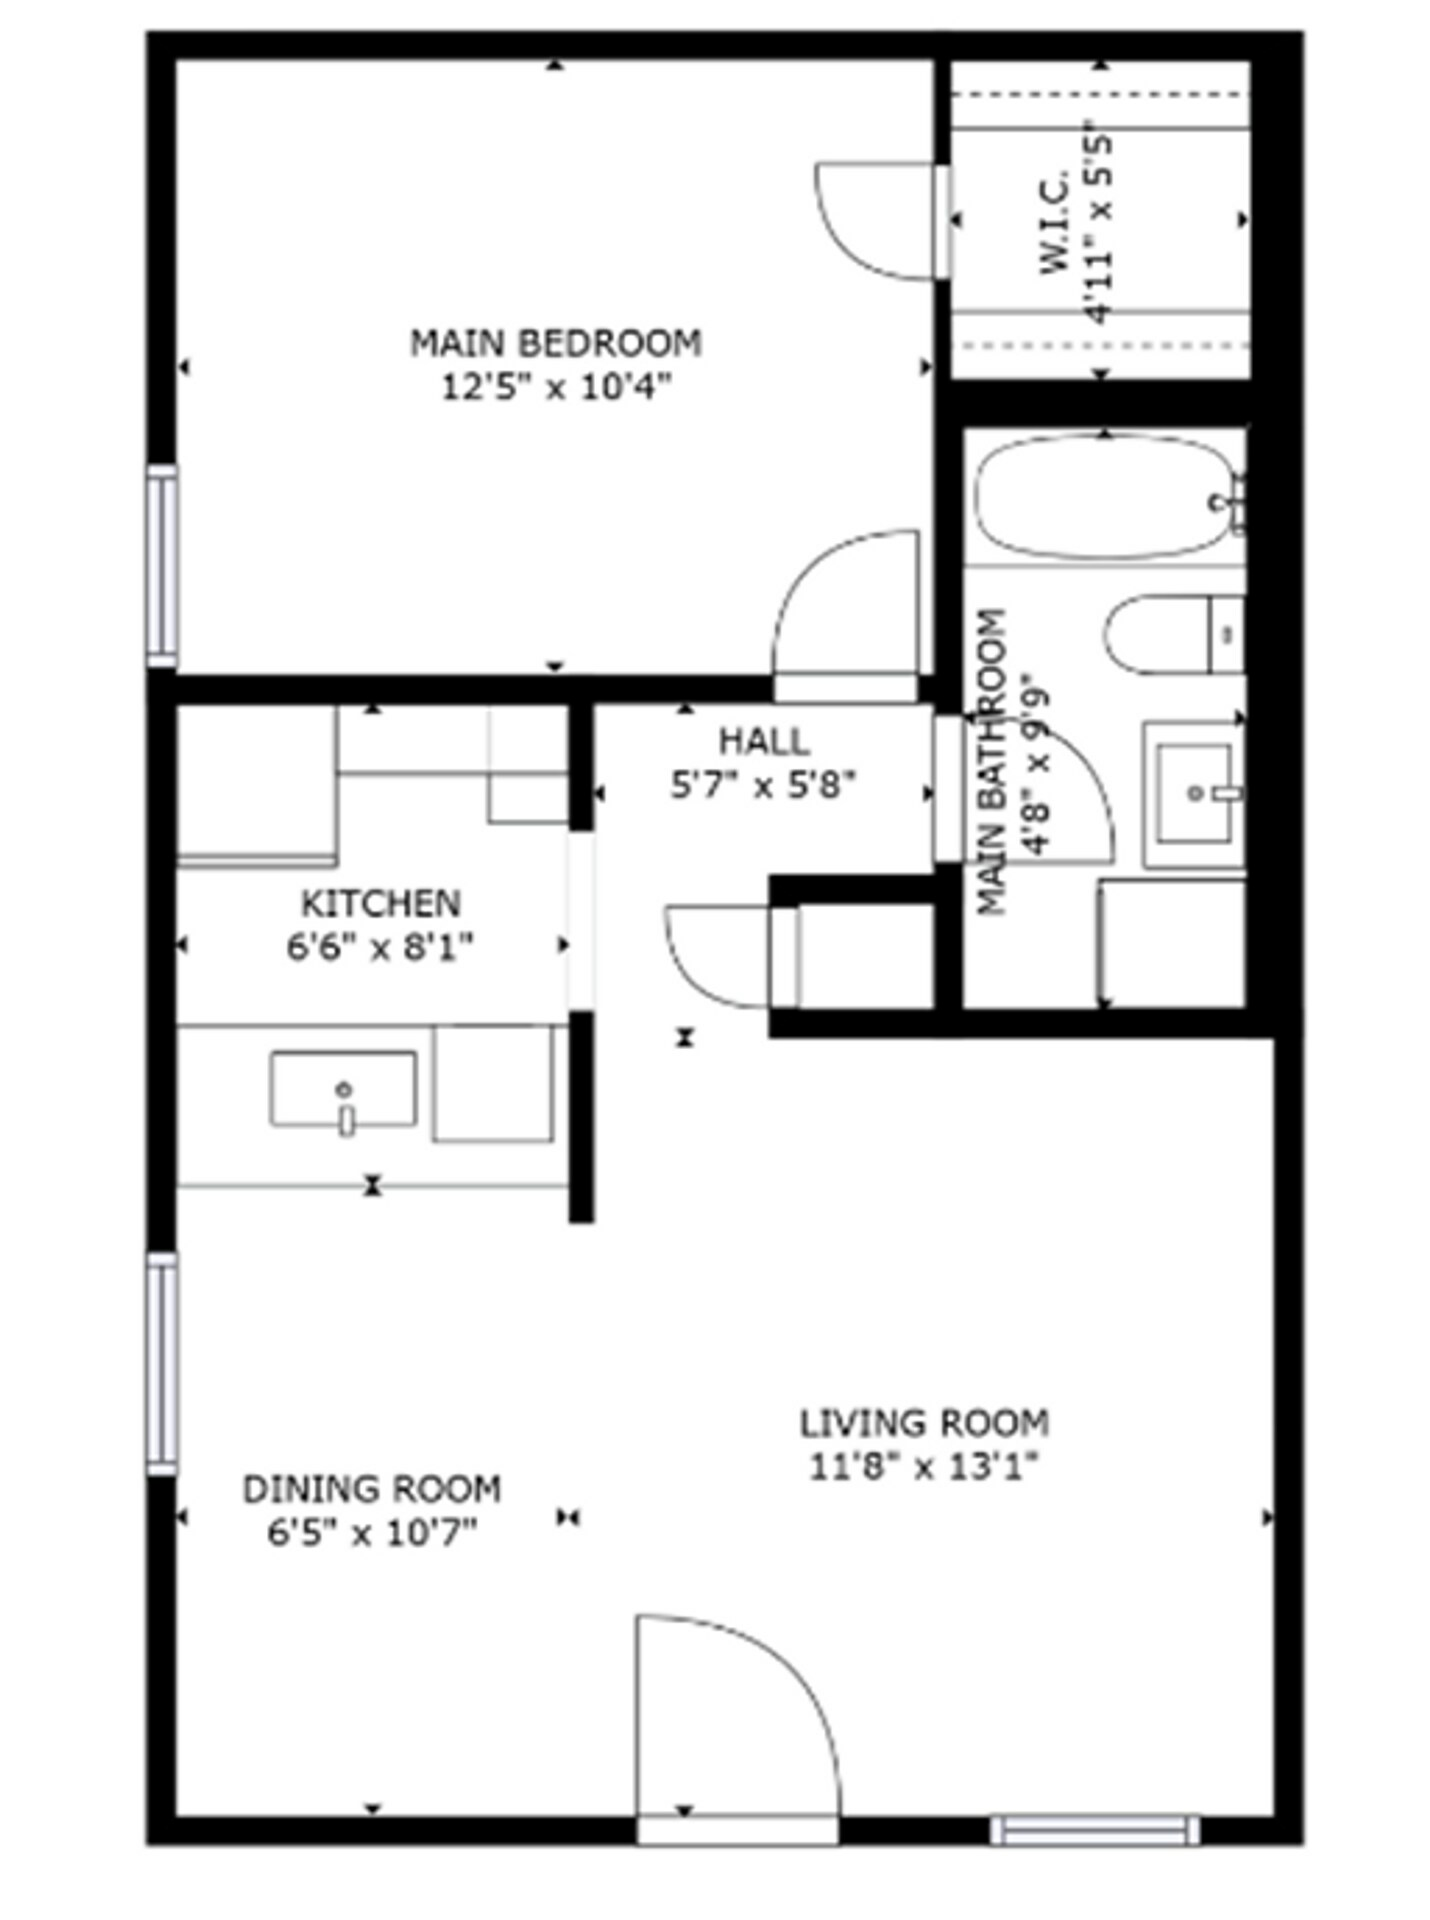 anderson-flats-apartments-austin-tx-floorplan.png